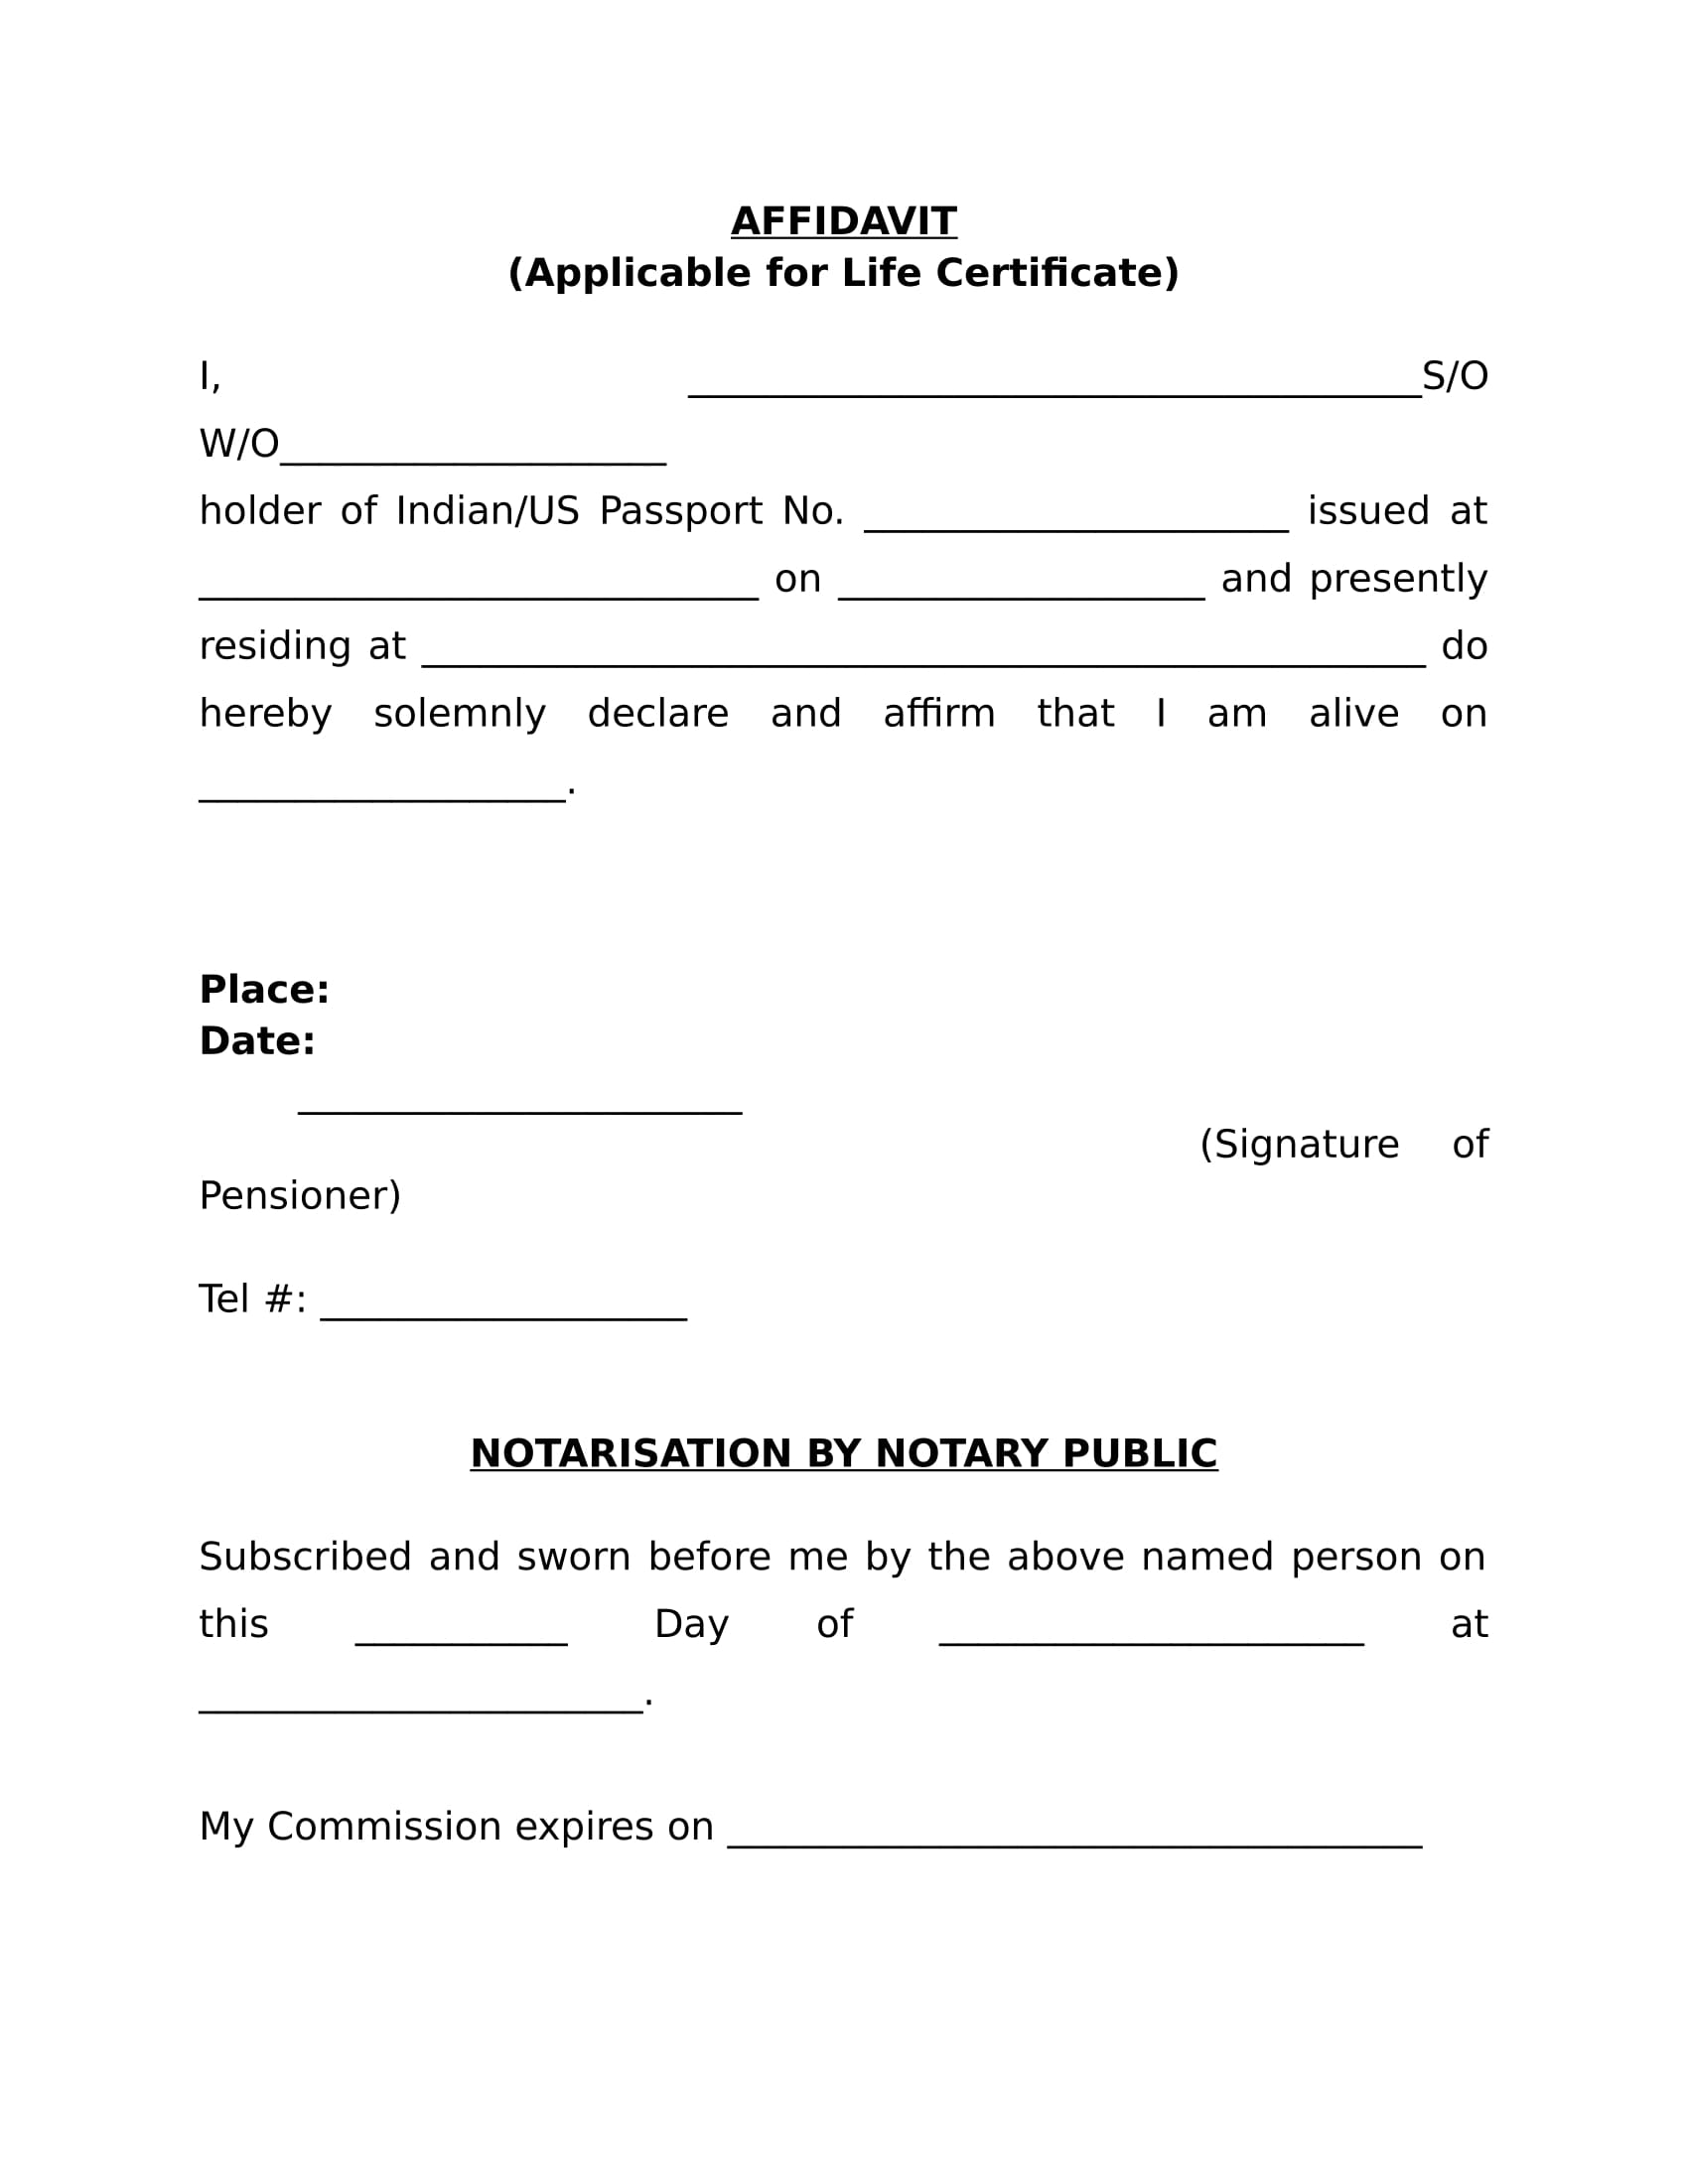 life certificate affidavit form sample 1